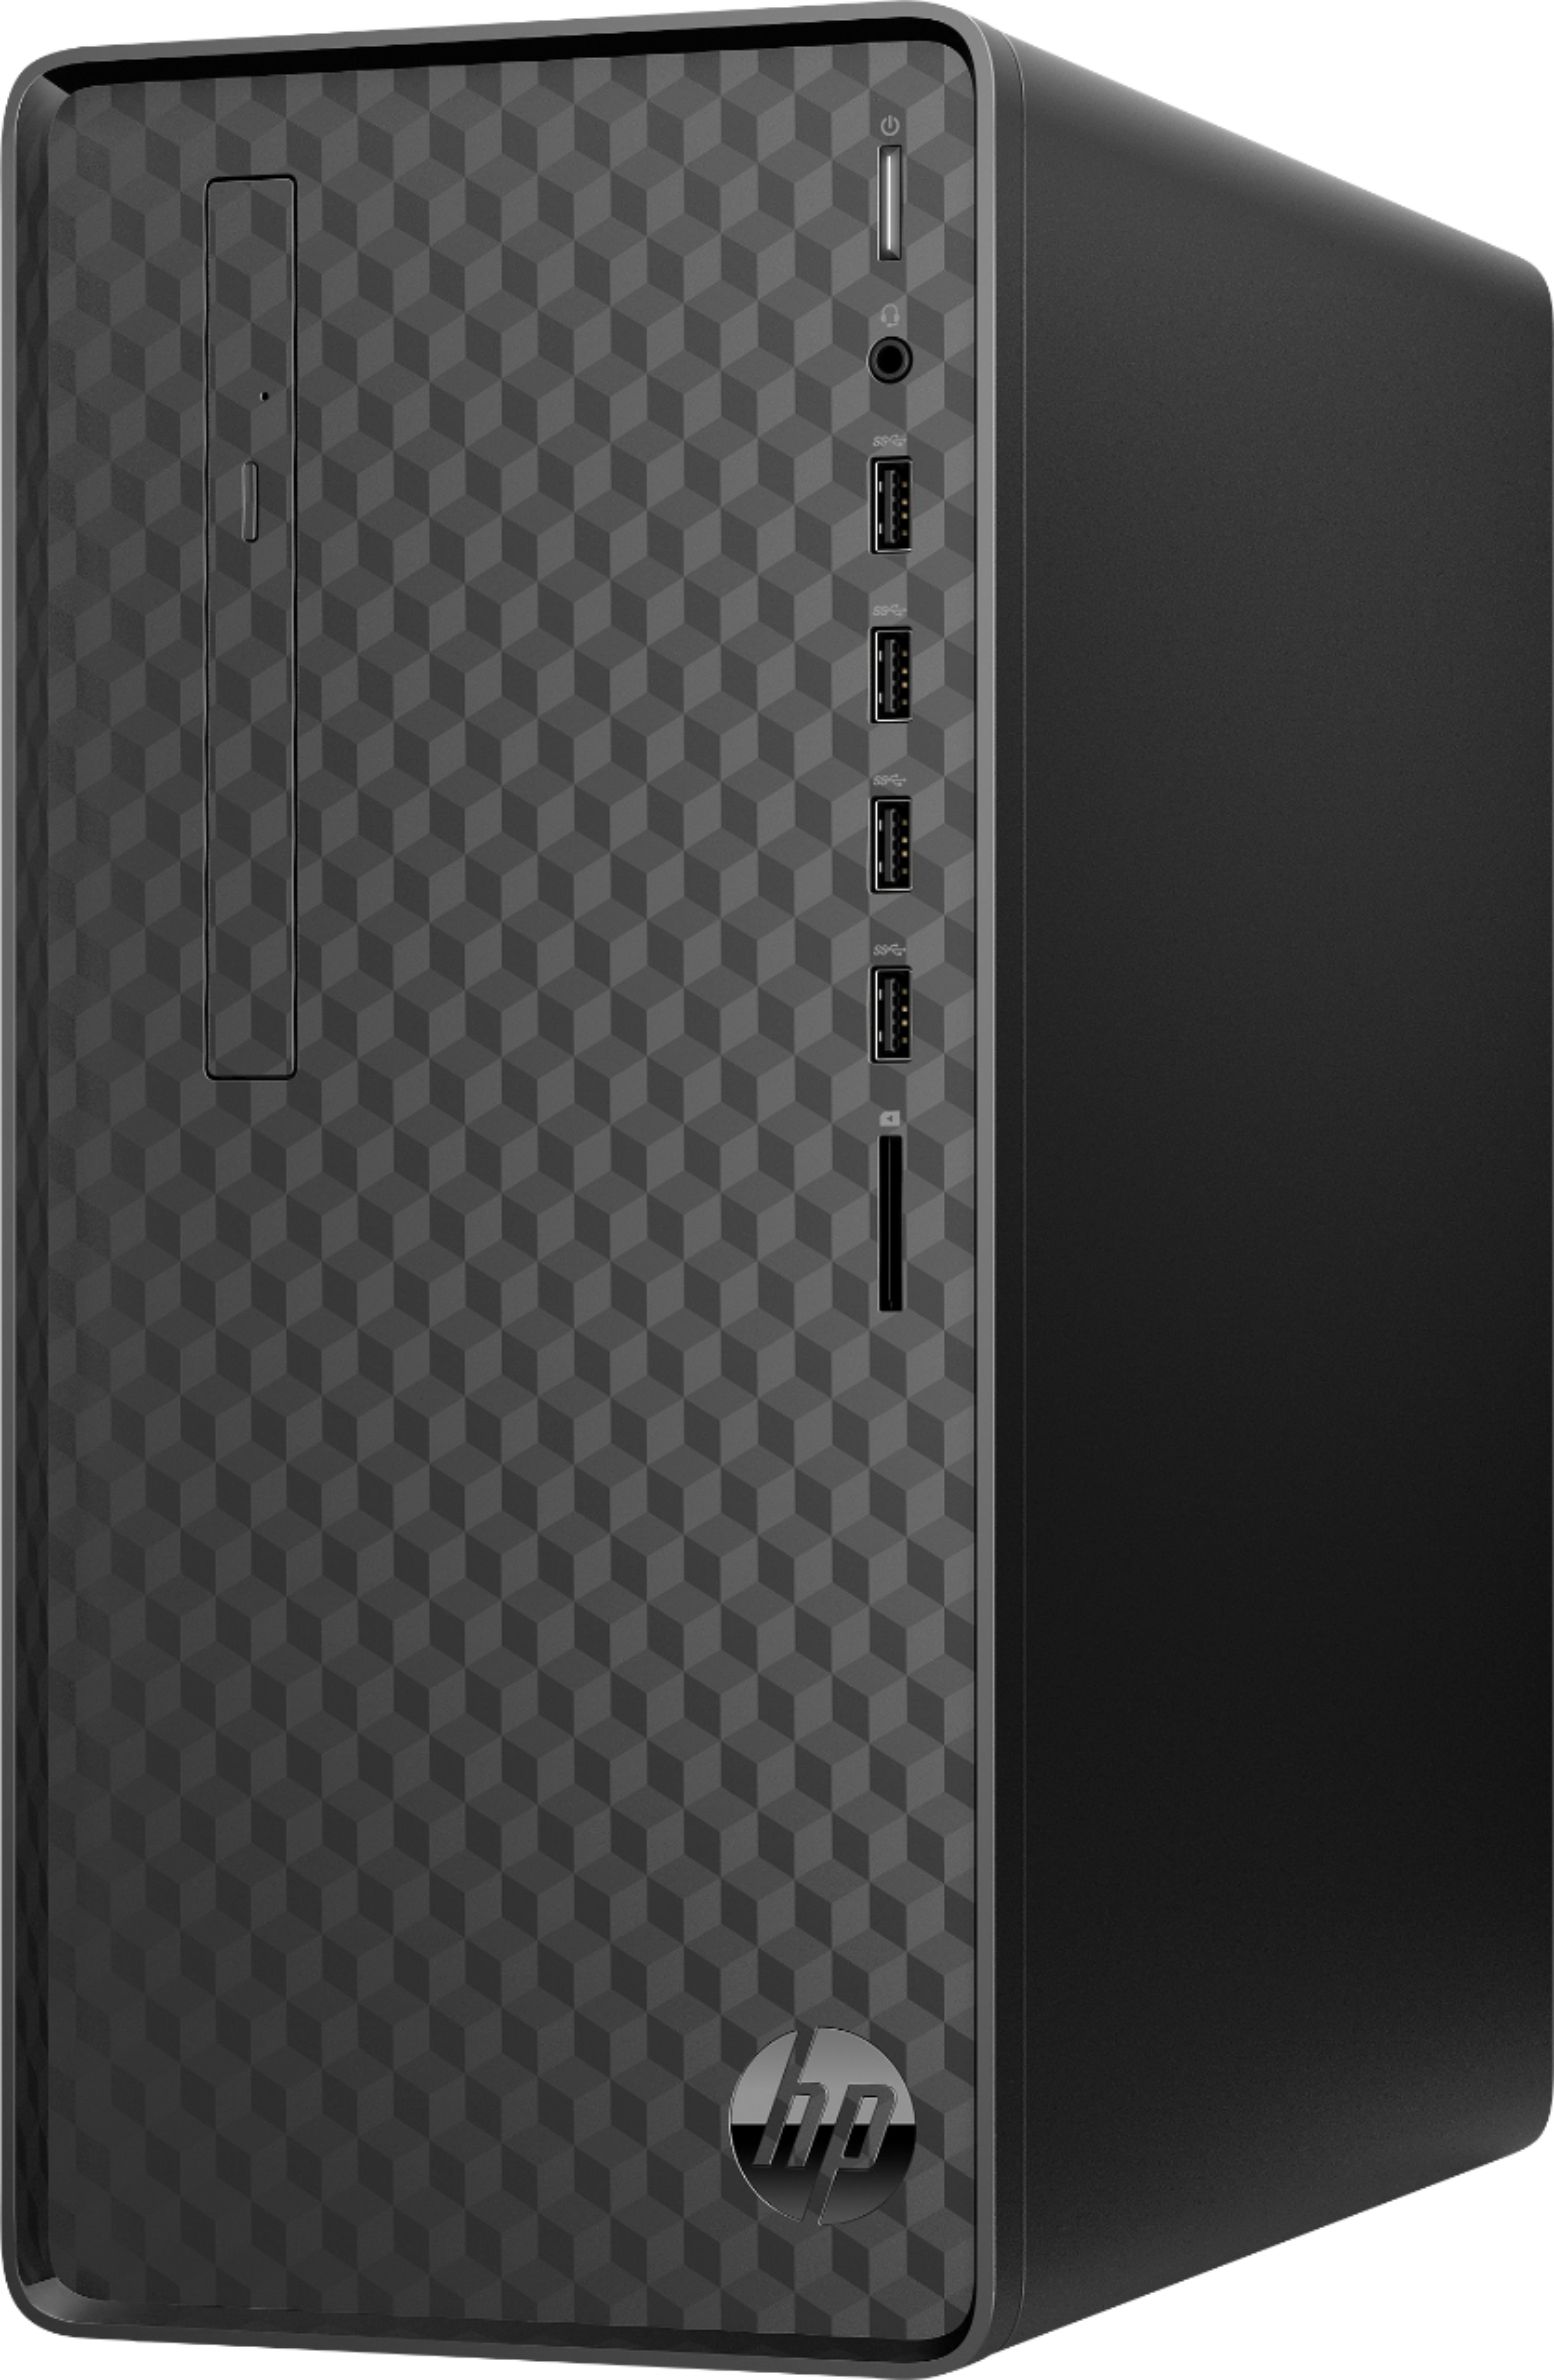 Angle View: HP - Desktop - AMD Ryzen 3-Series - 8GB Memory - 256GB Solid State Drive - Jet Black